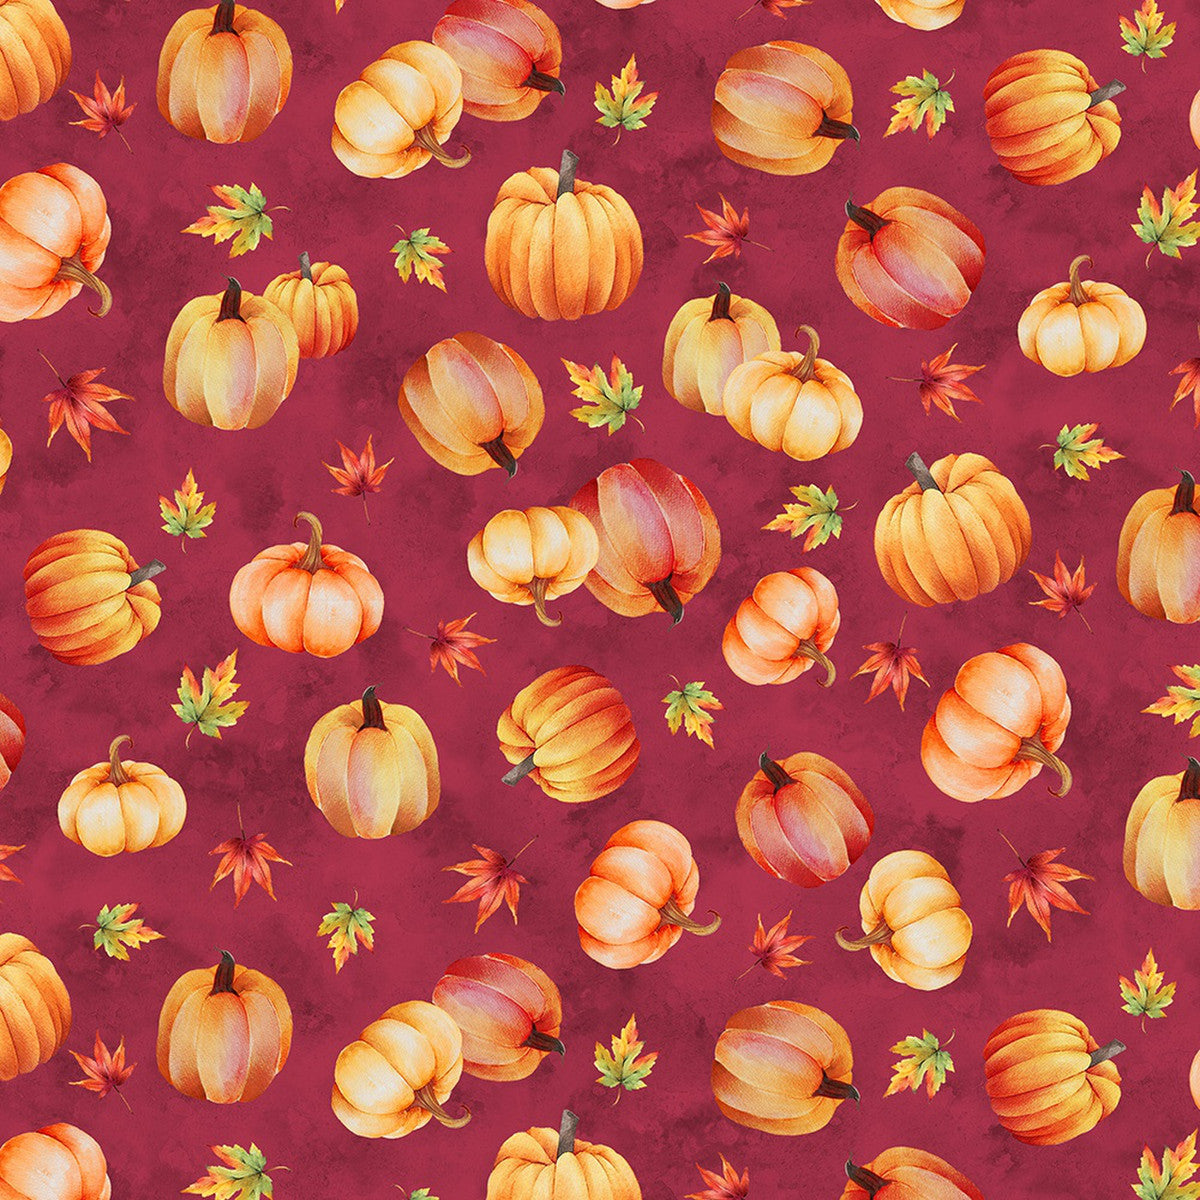 44 x 36 Wilmington Prints Tossed Pumpkins on Plum Thanksgiving 100% Cotton Fabric